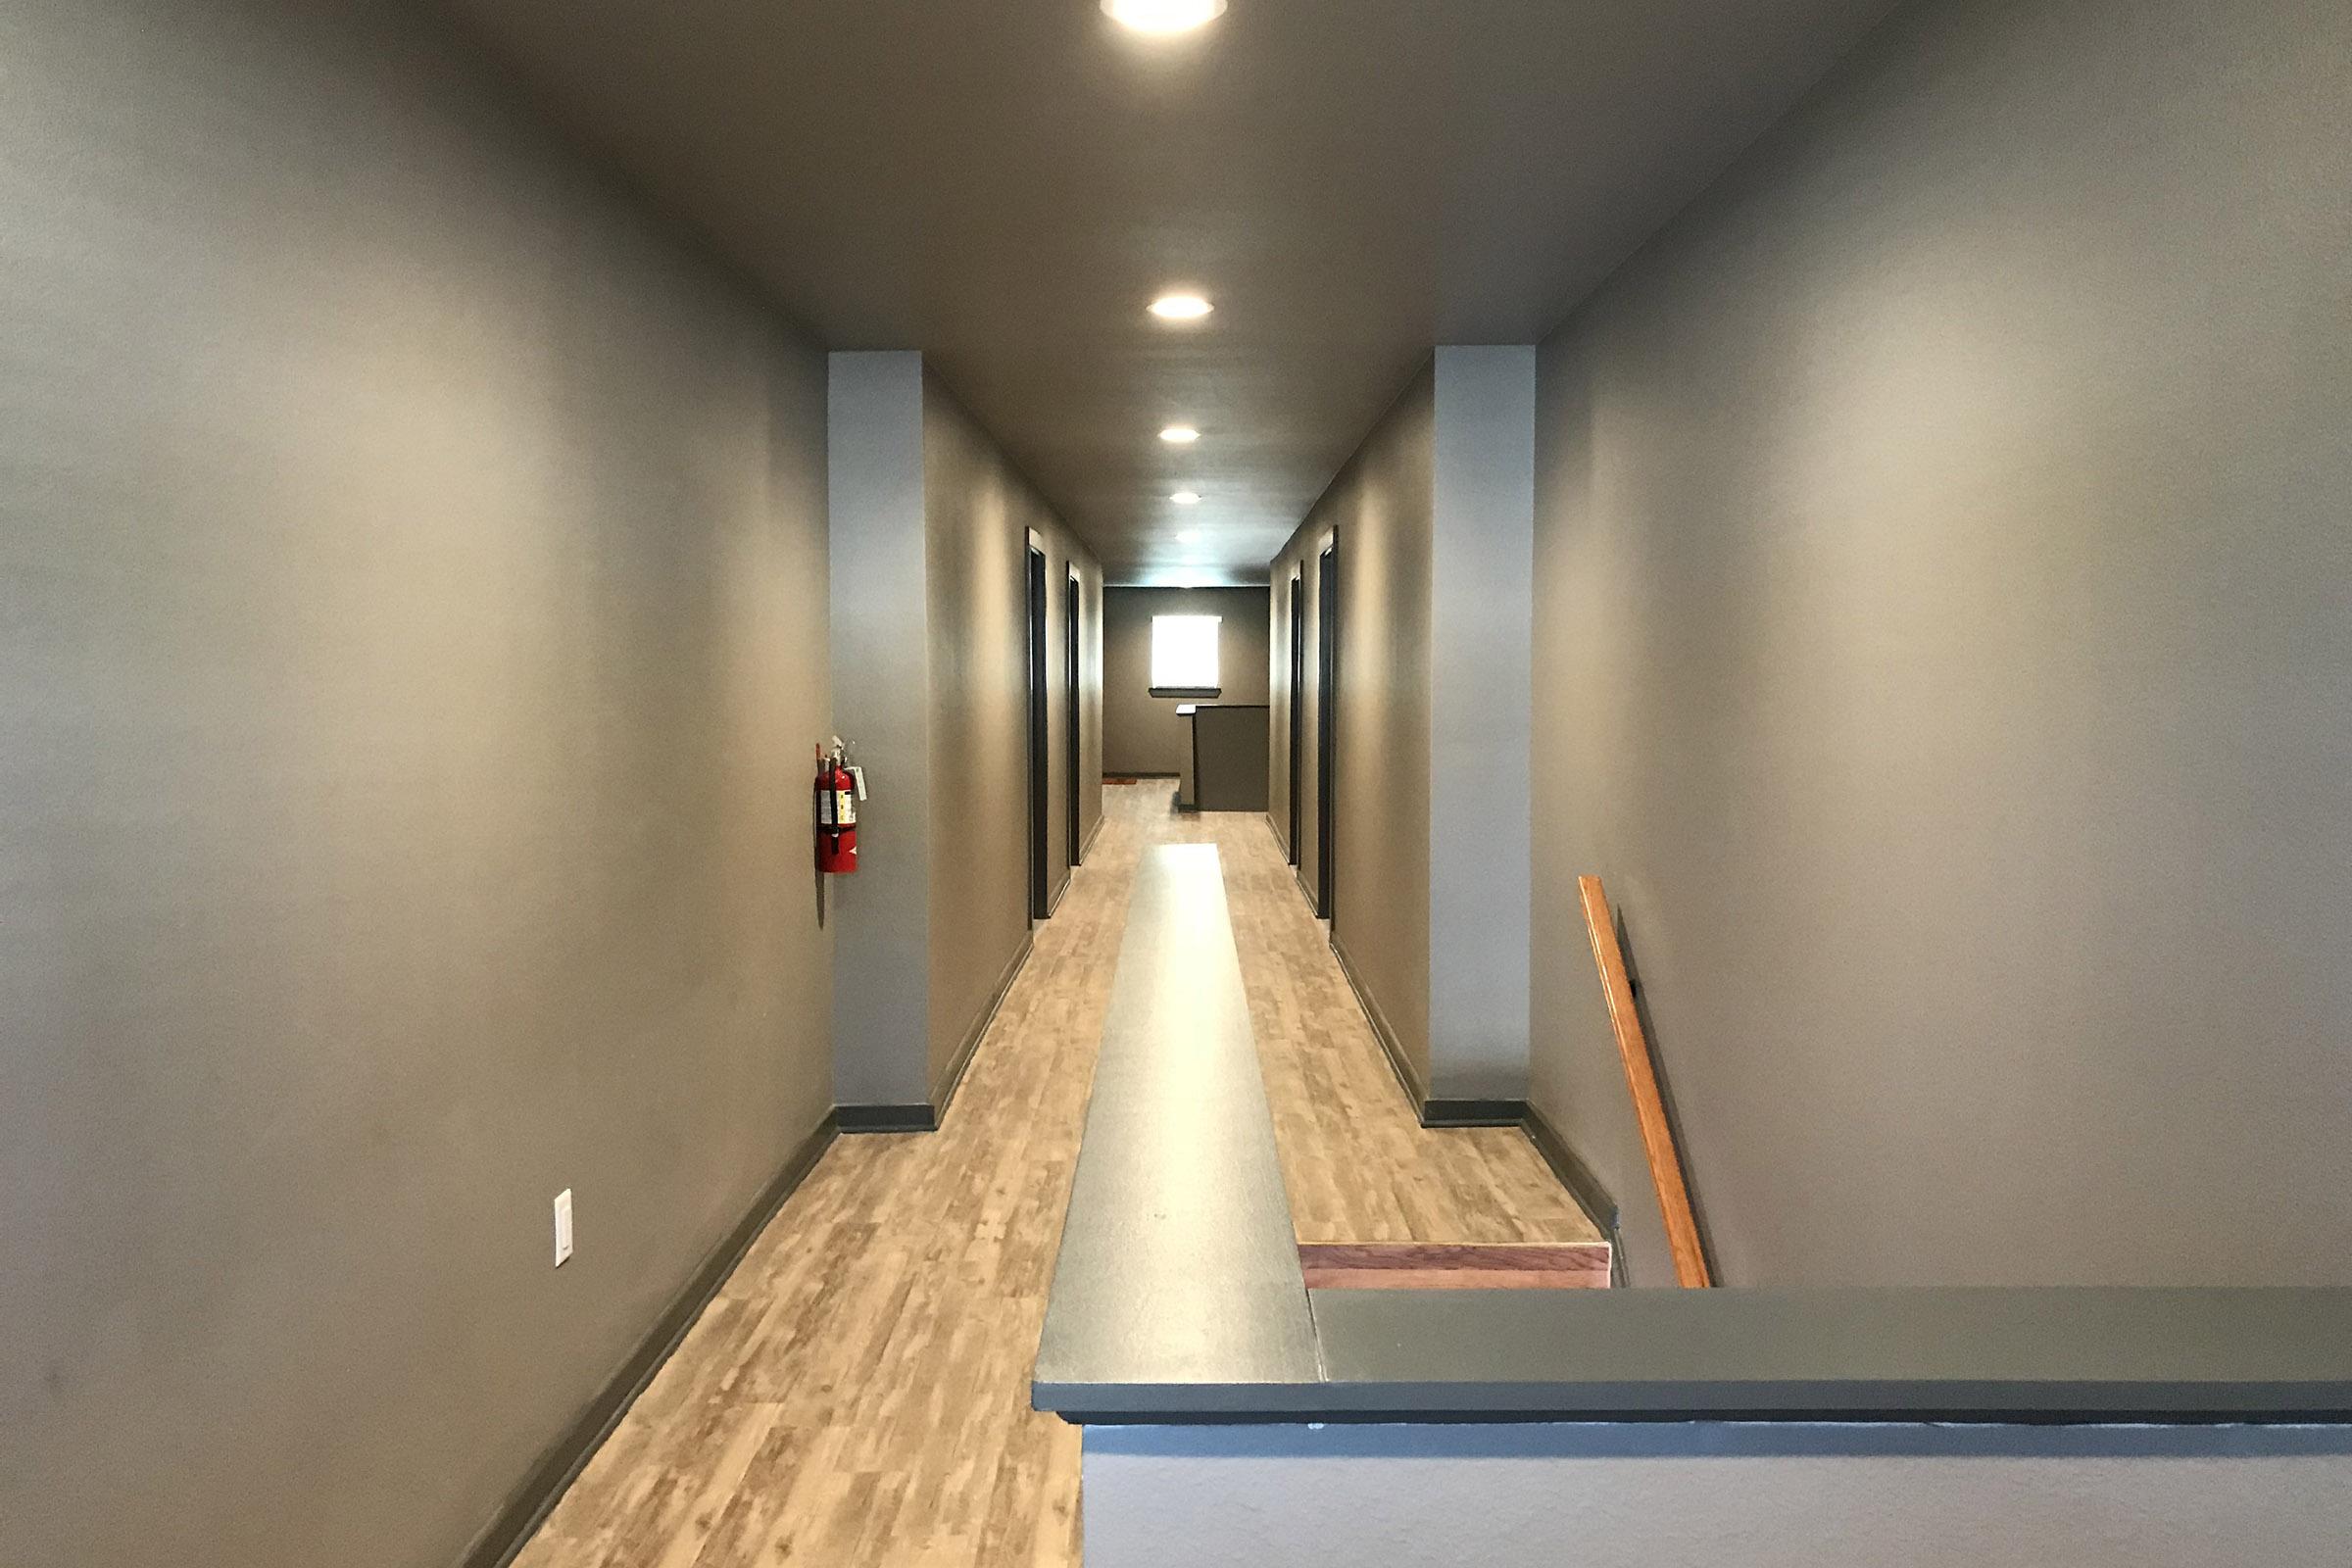 community hallway with wooden floors